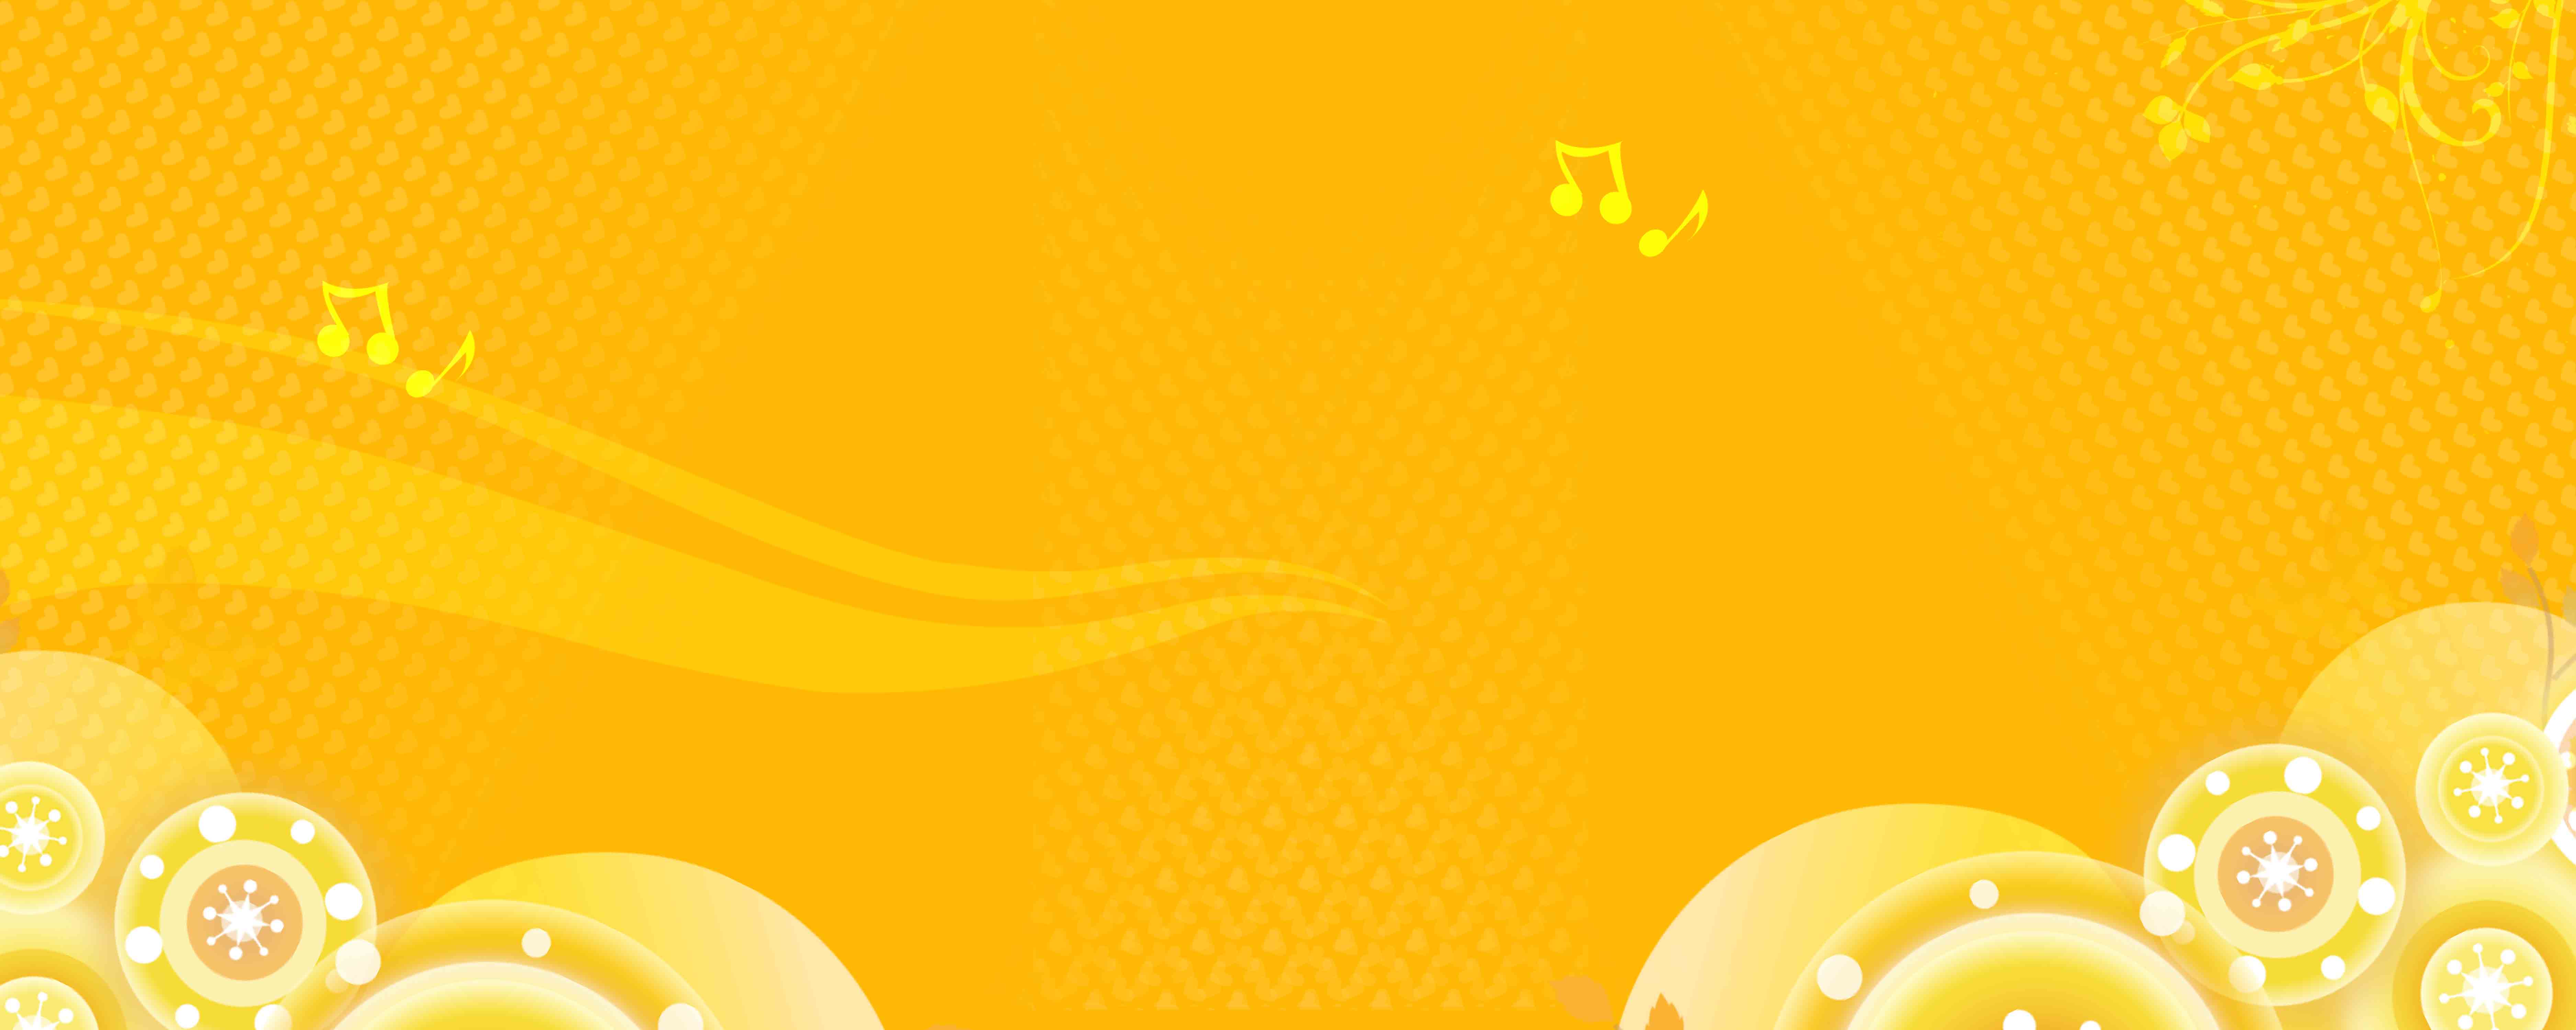 🔥 Flex Yellow Banner Desing Background Download | CBEditz